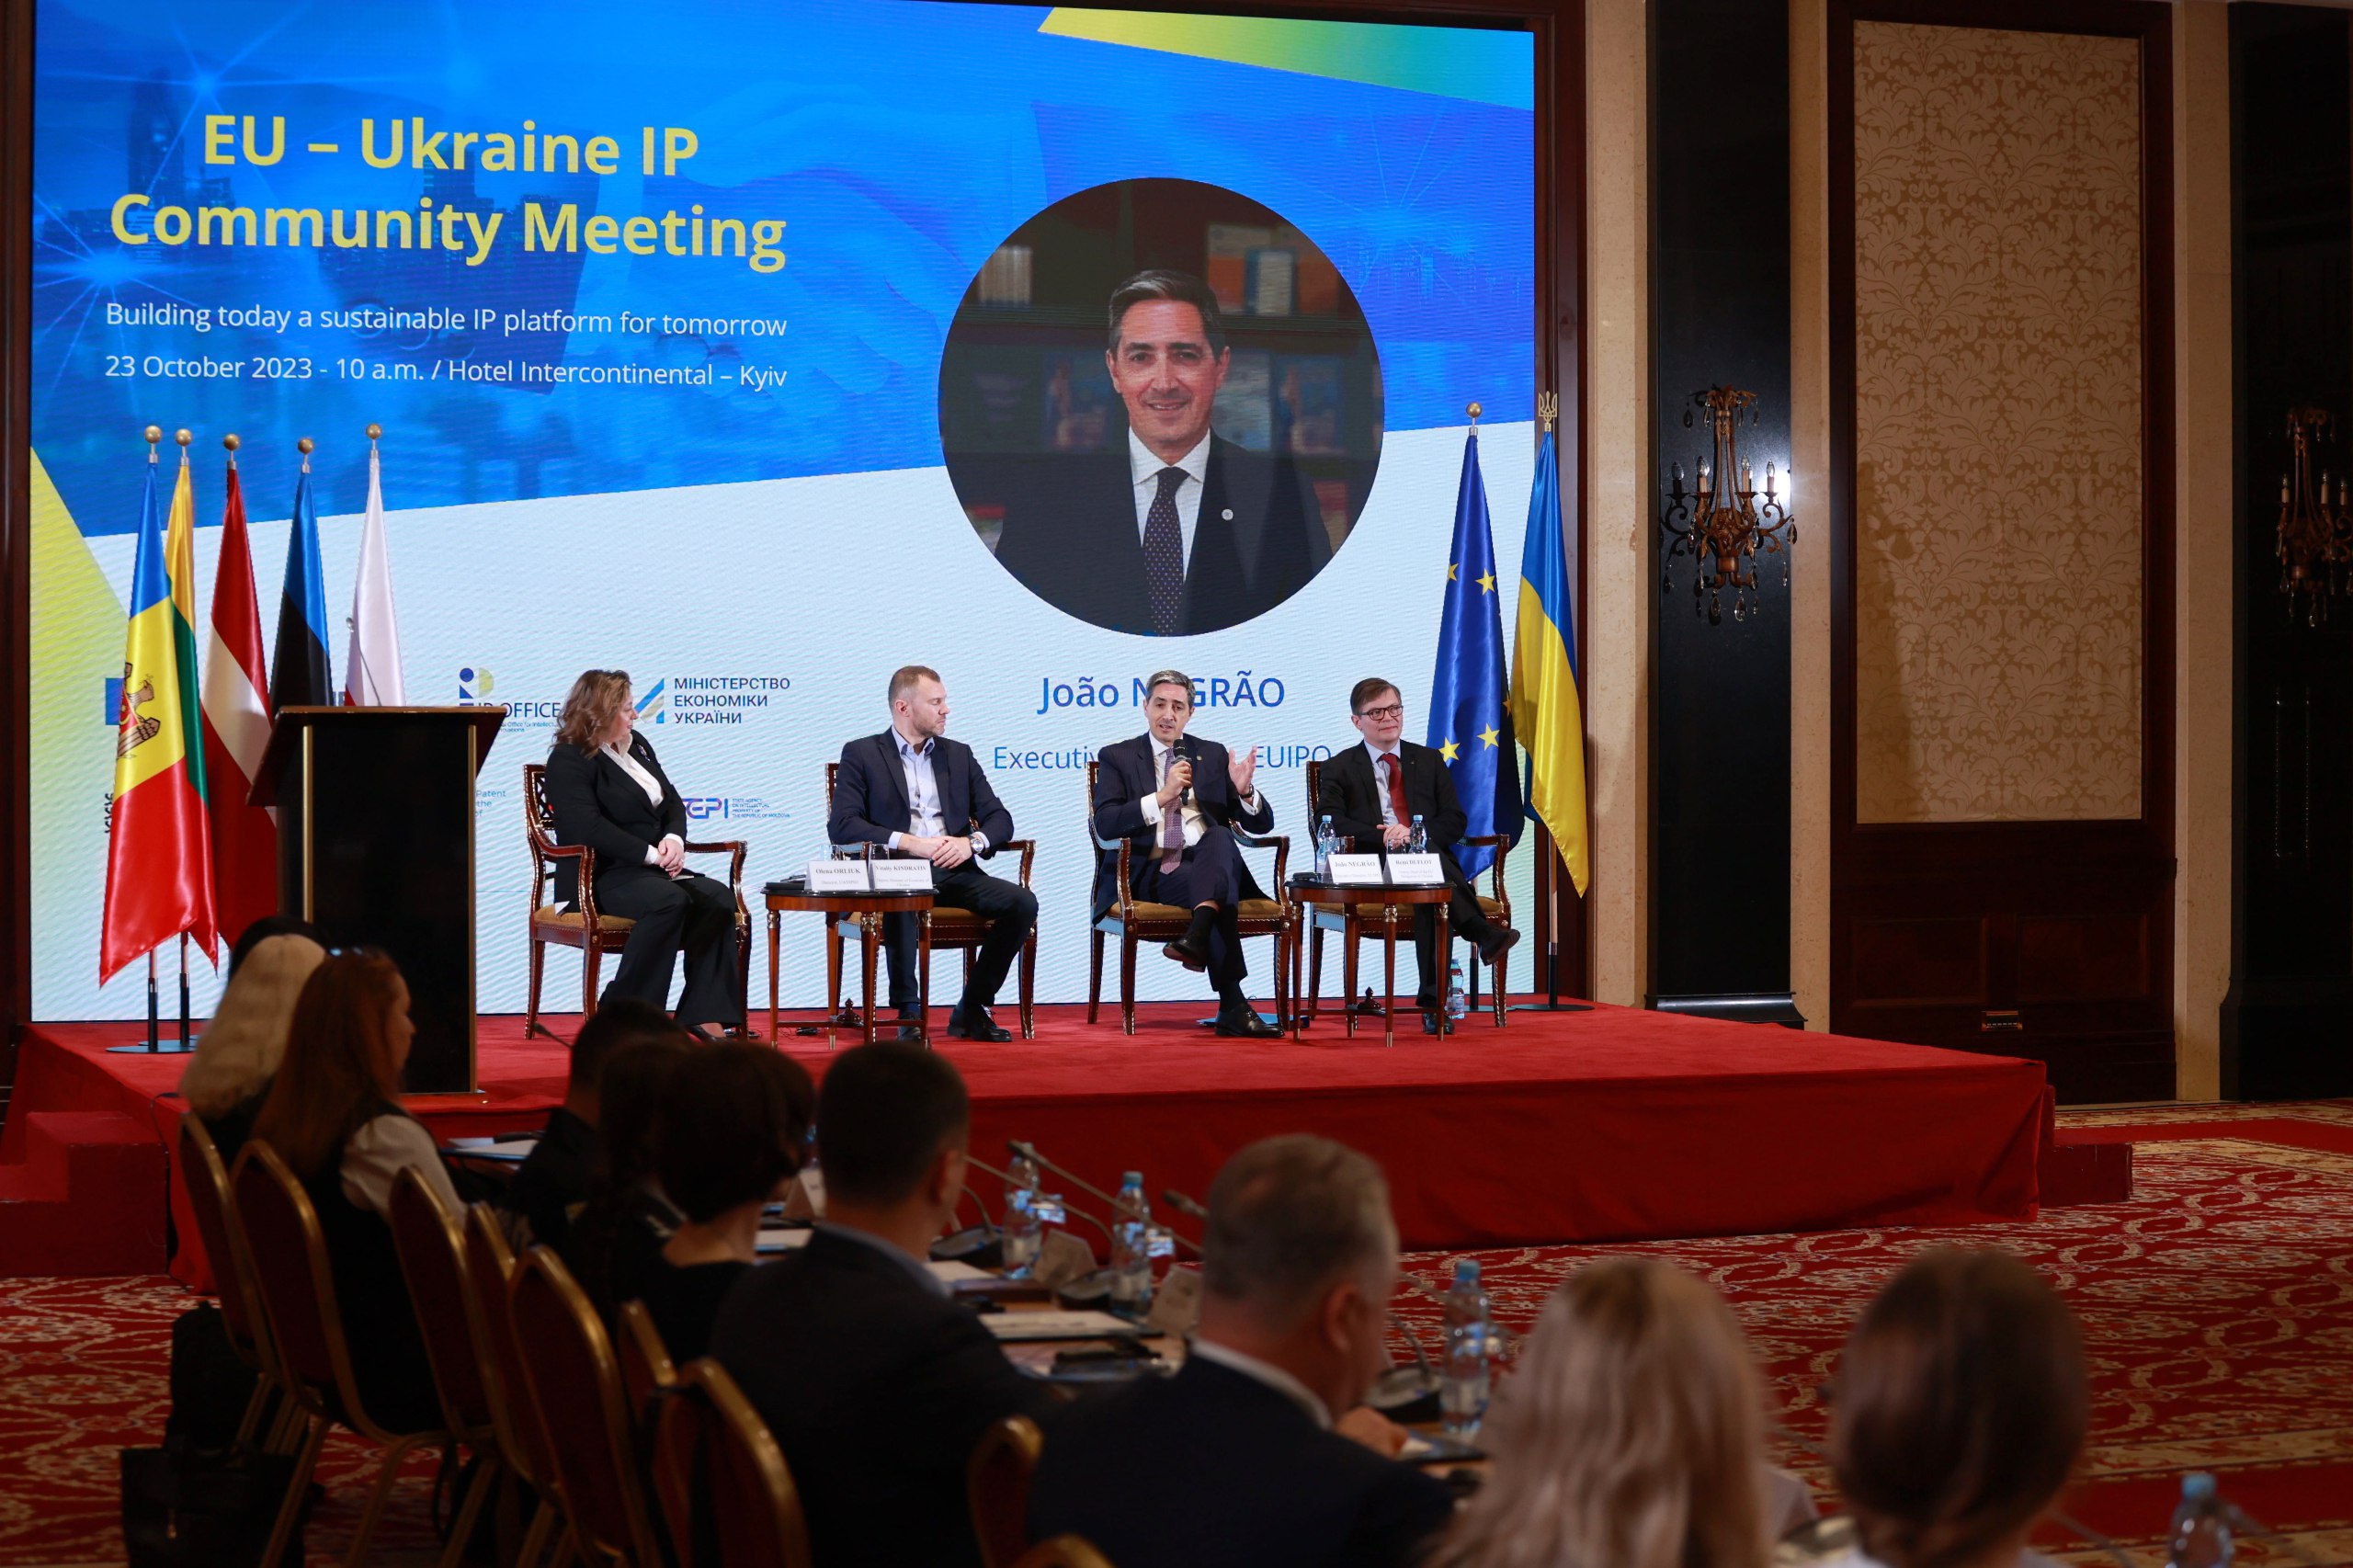 João Negrão, EUIPO’s Executive Director: Active support of Ukraine is our priority